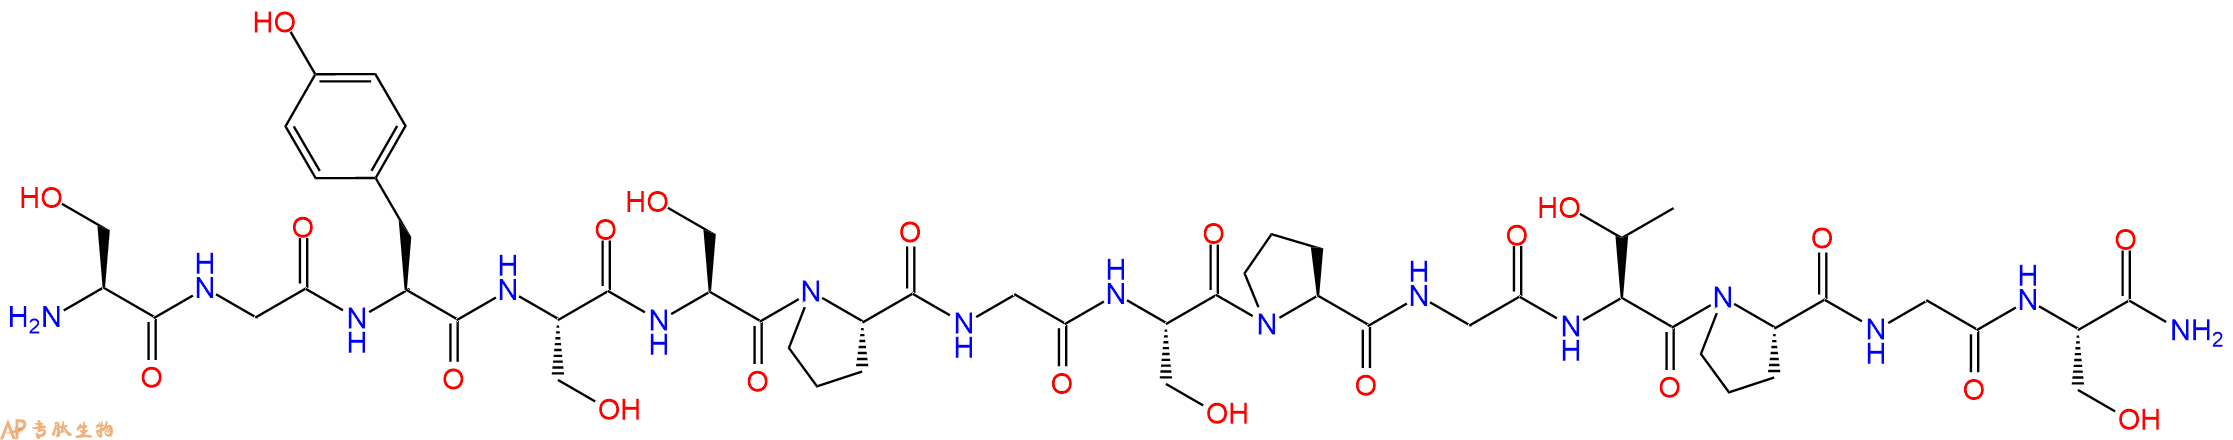 专肽生物产品Tau肽 Tau Peptide (512-525), amide2022956-61-0